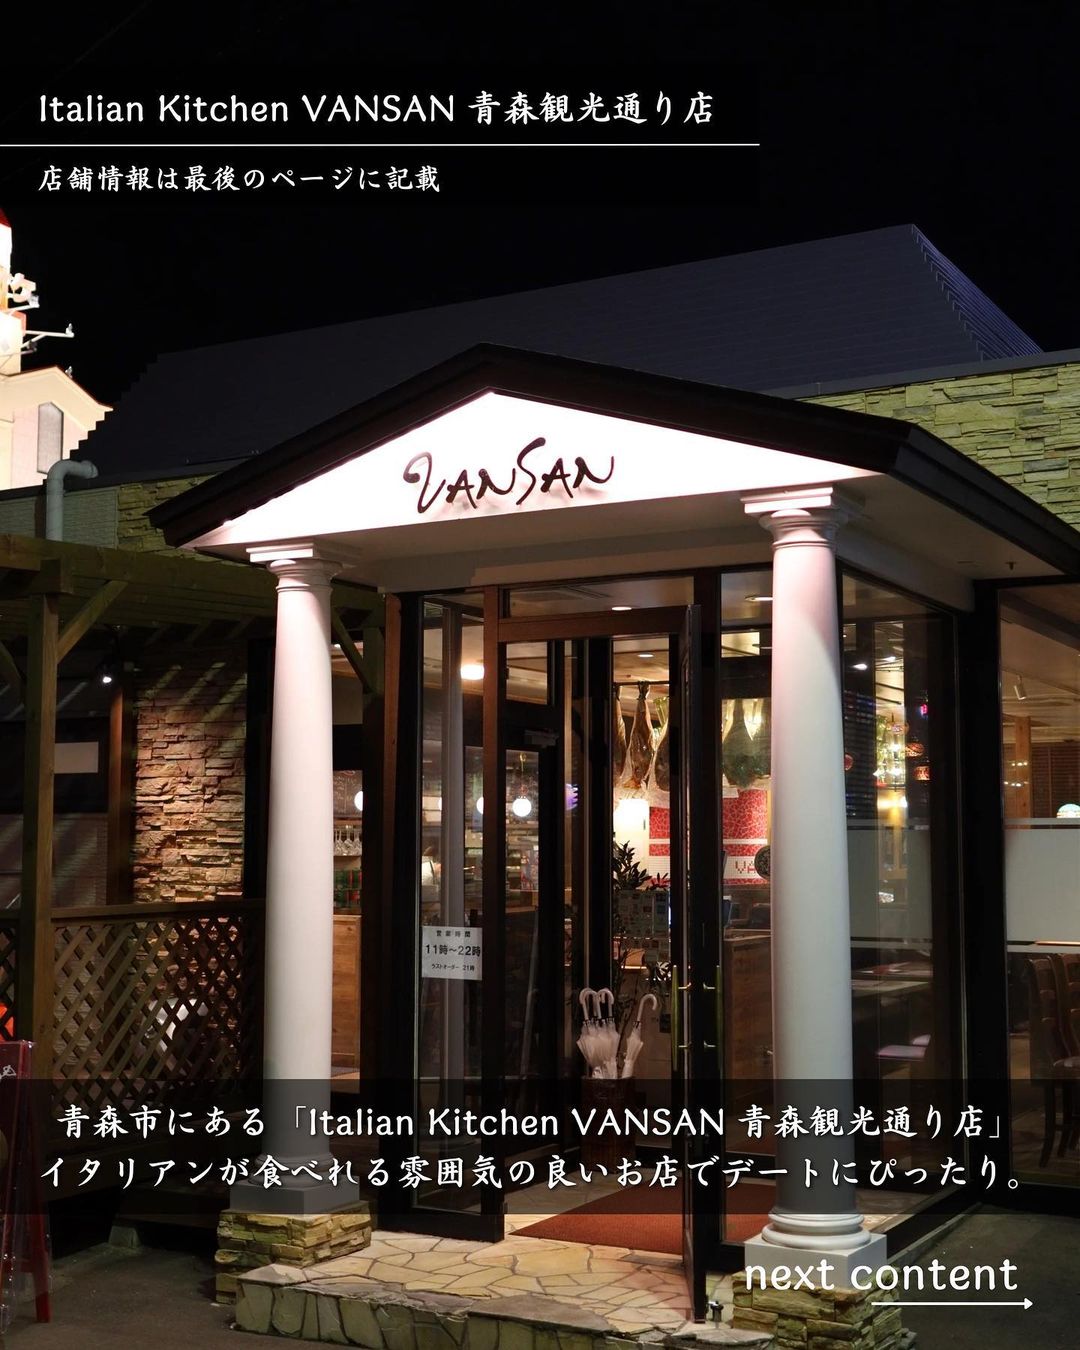 【青森市・Italian Kitchen VANSAN 青森観光通り店】外観